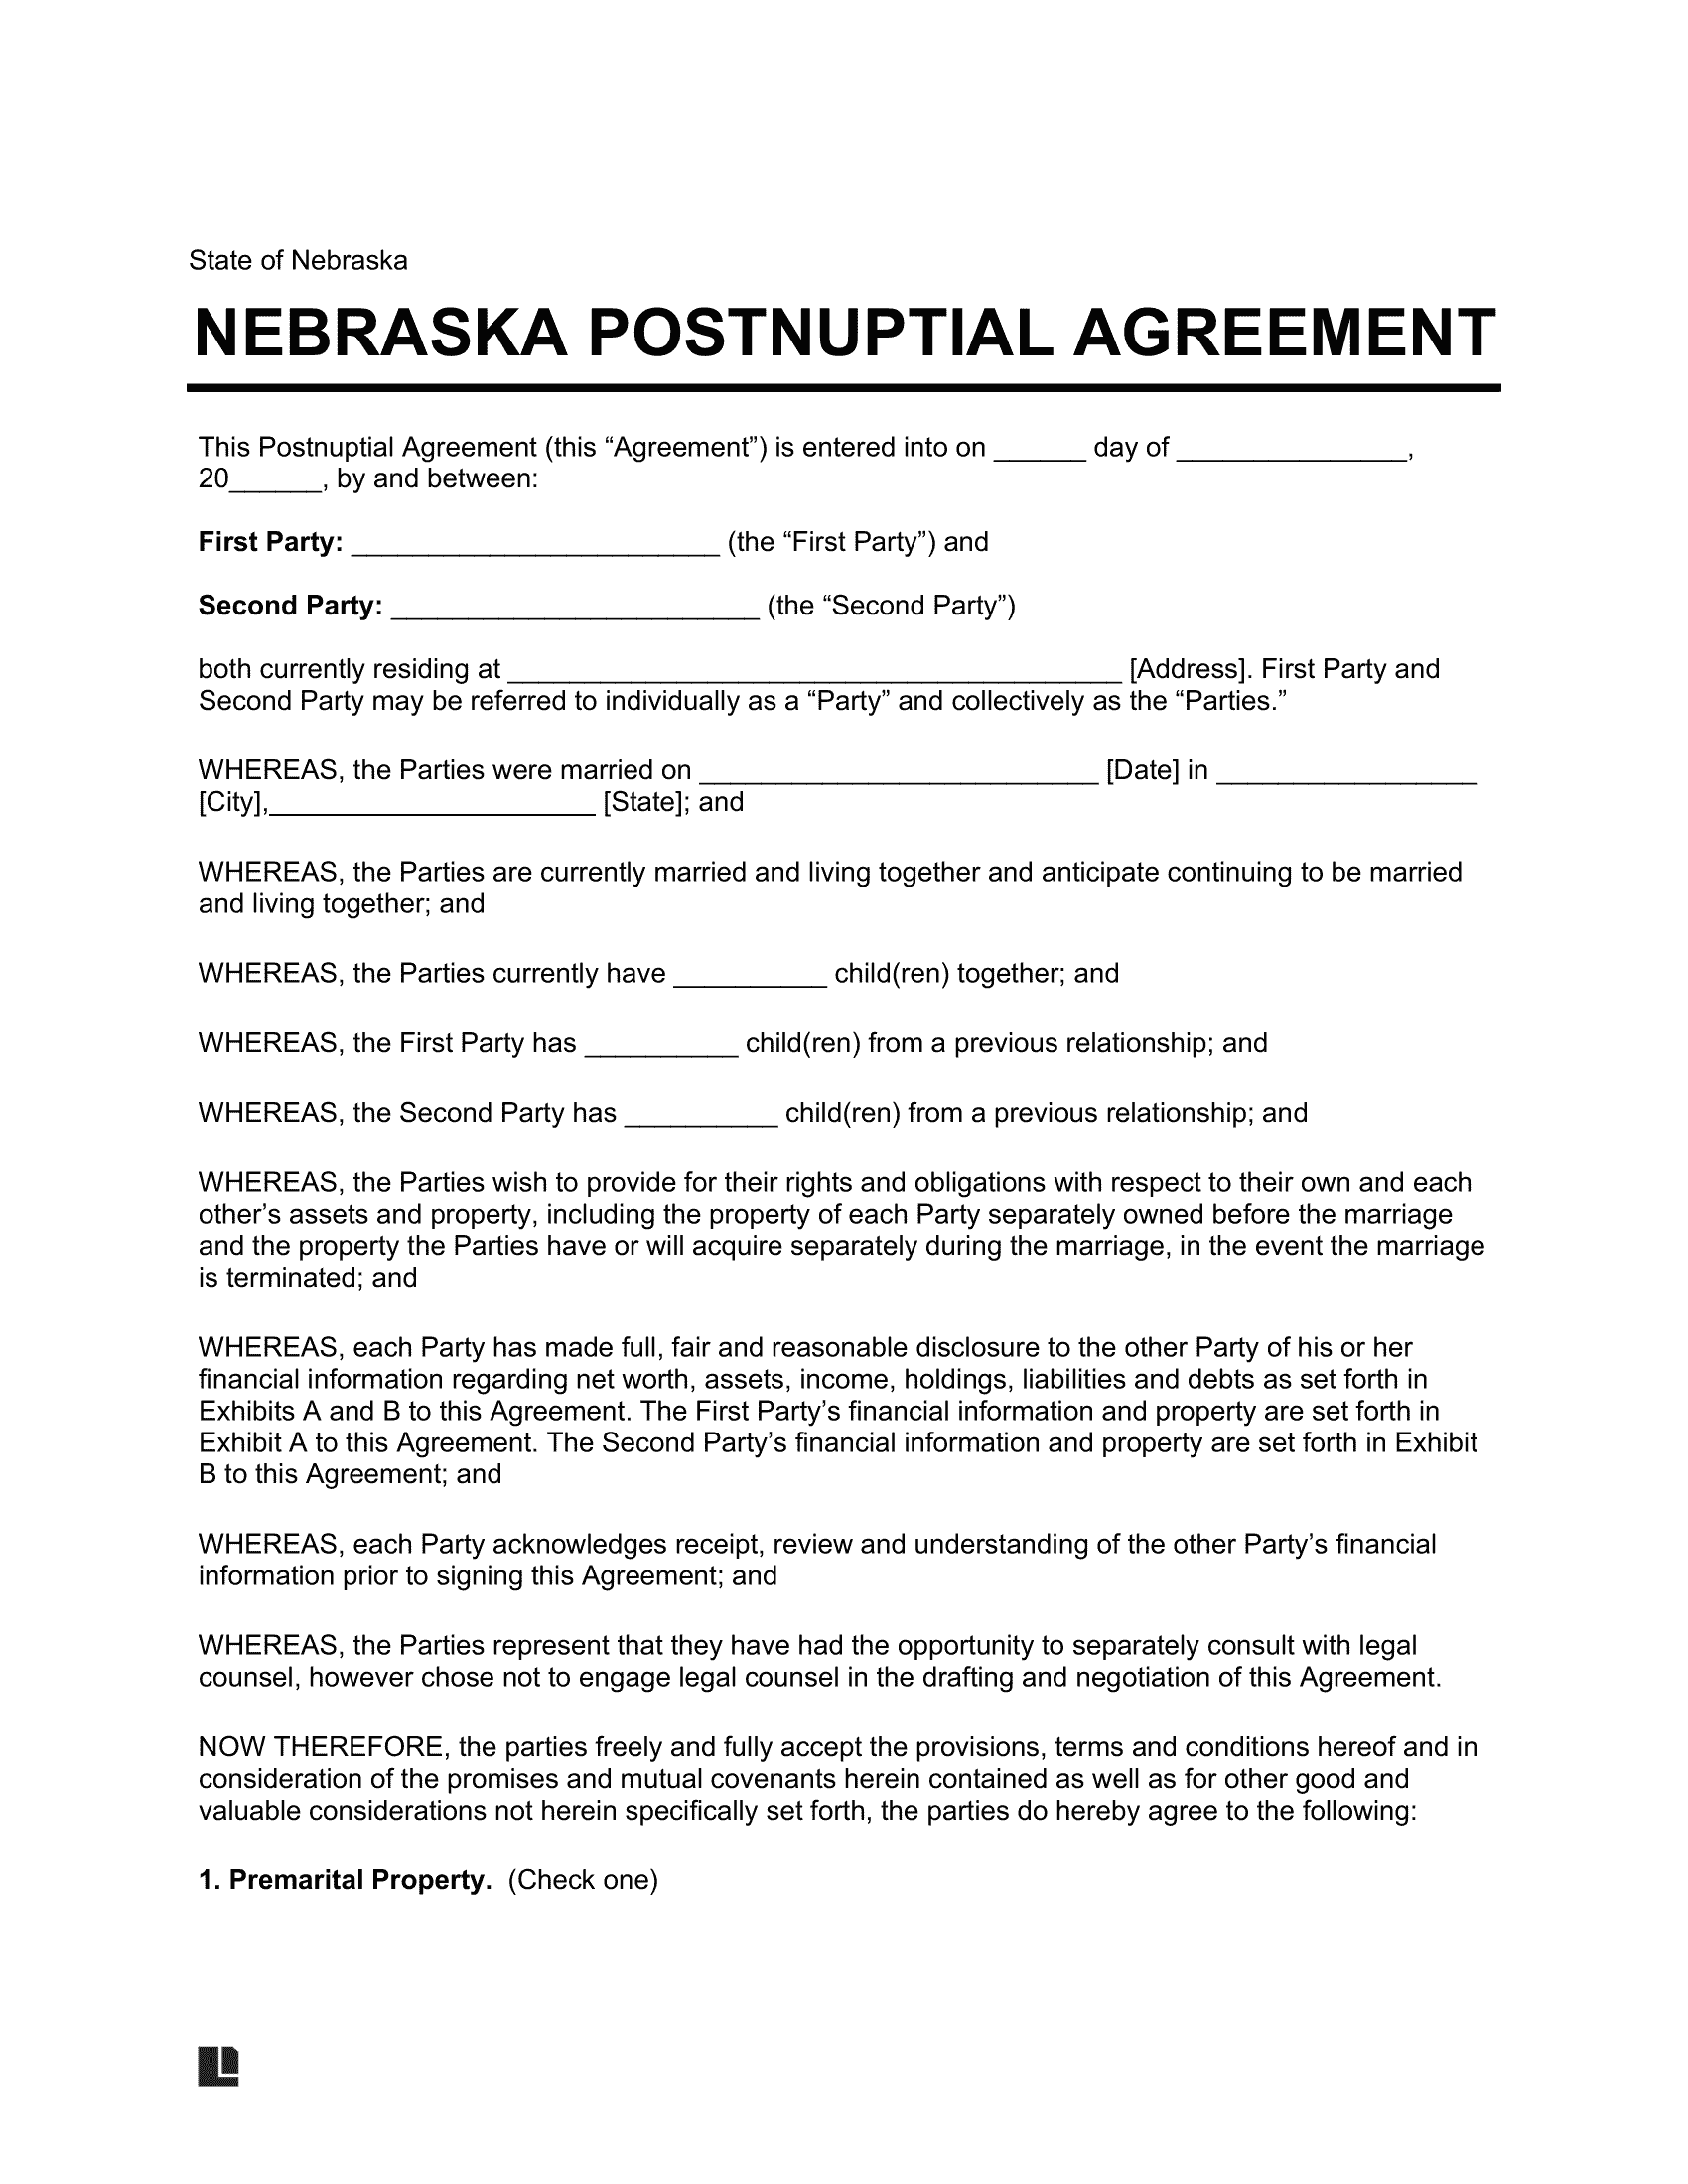 Nebraska Postnuptial Agreement Template